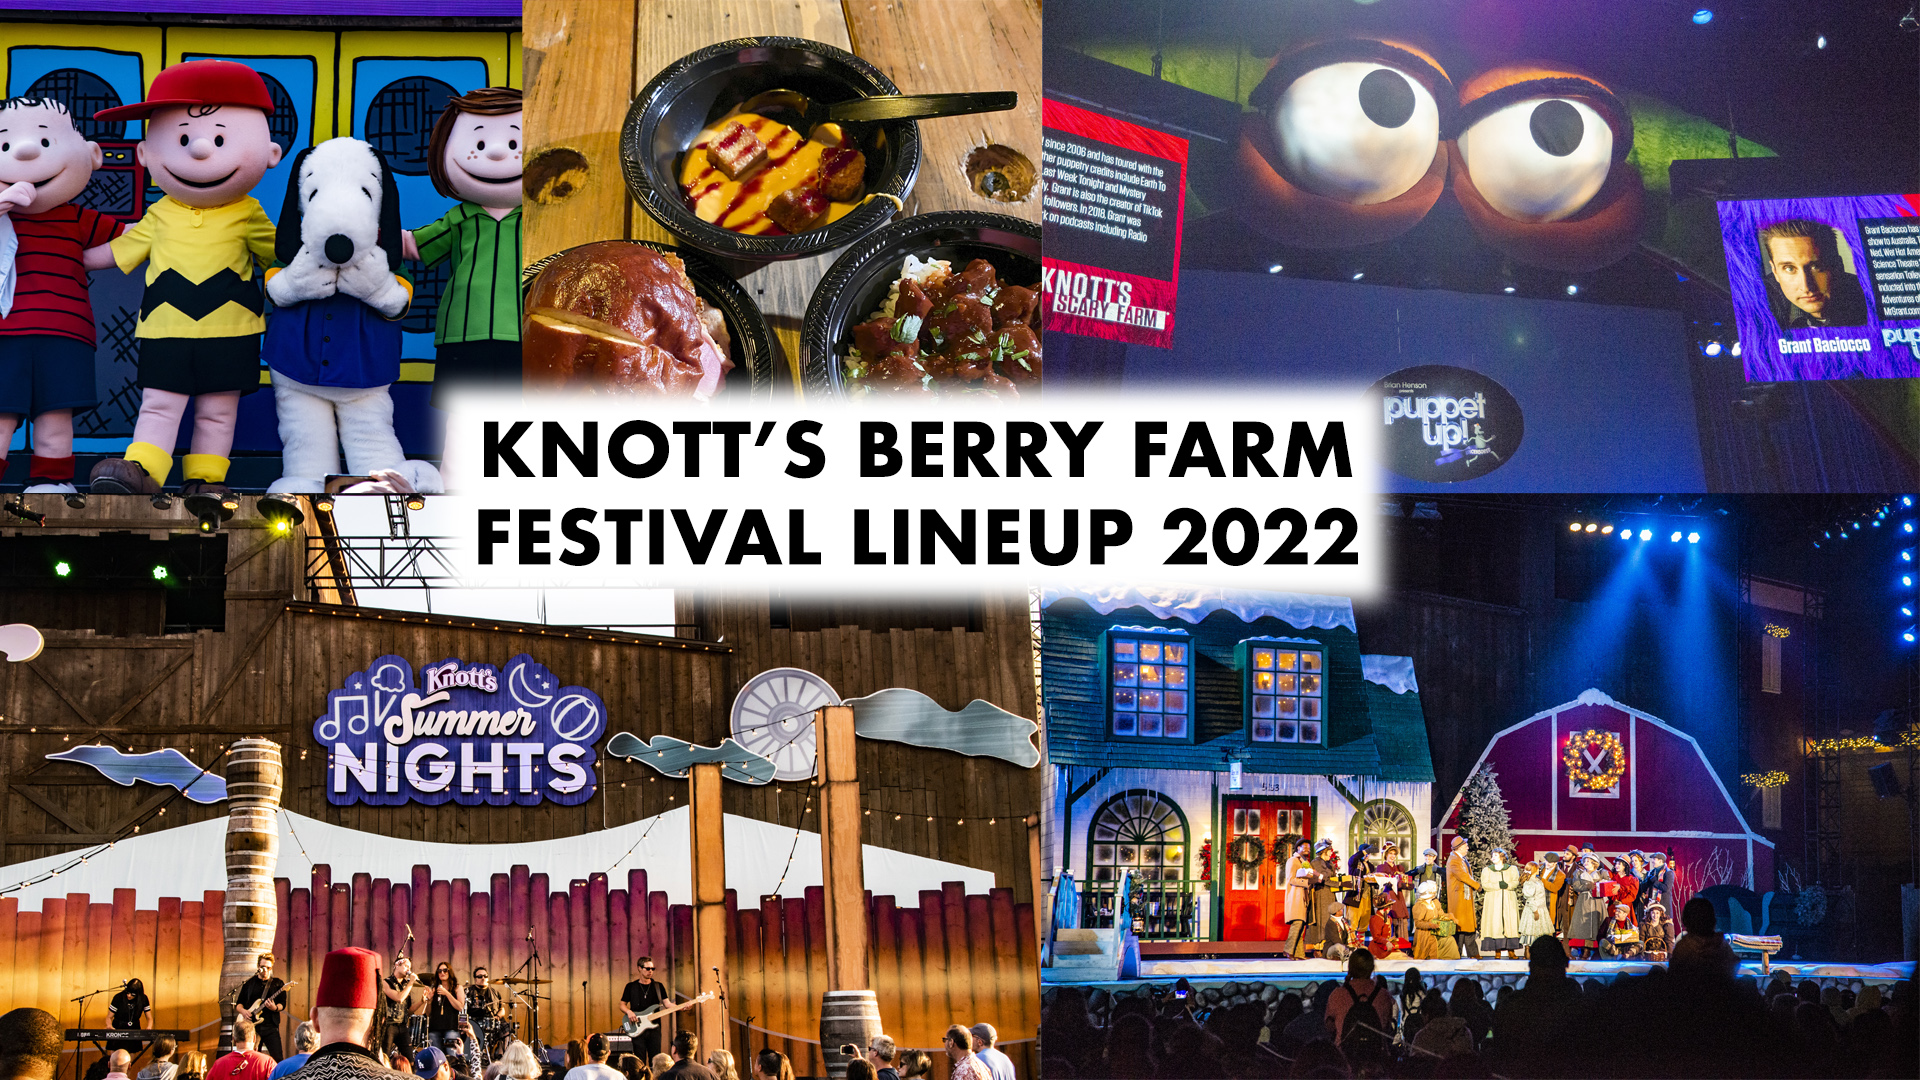 Knott’s Berry Farm’s Fun Festival Lineup for 2022